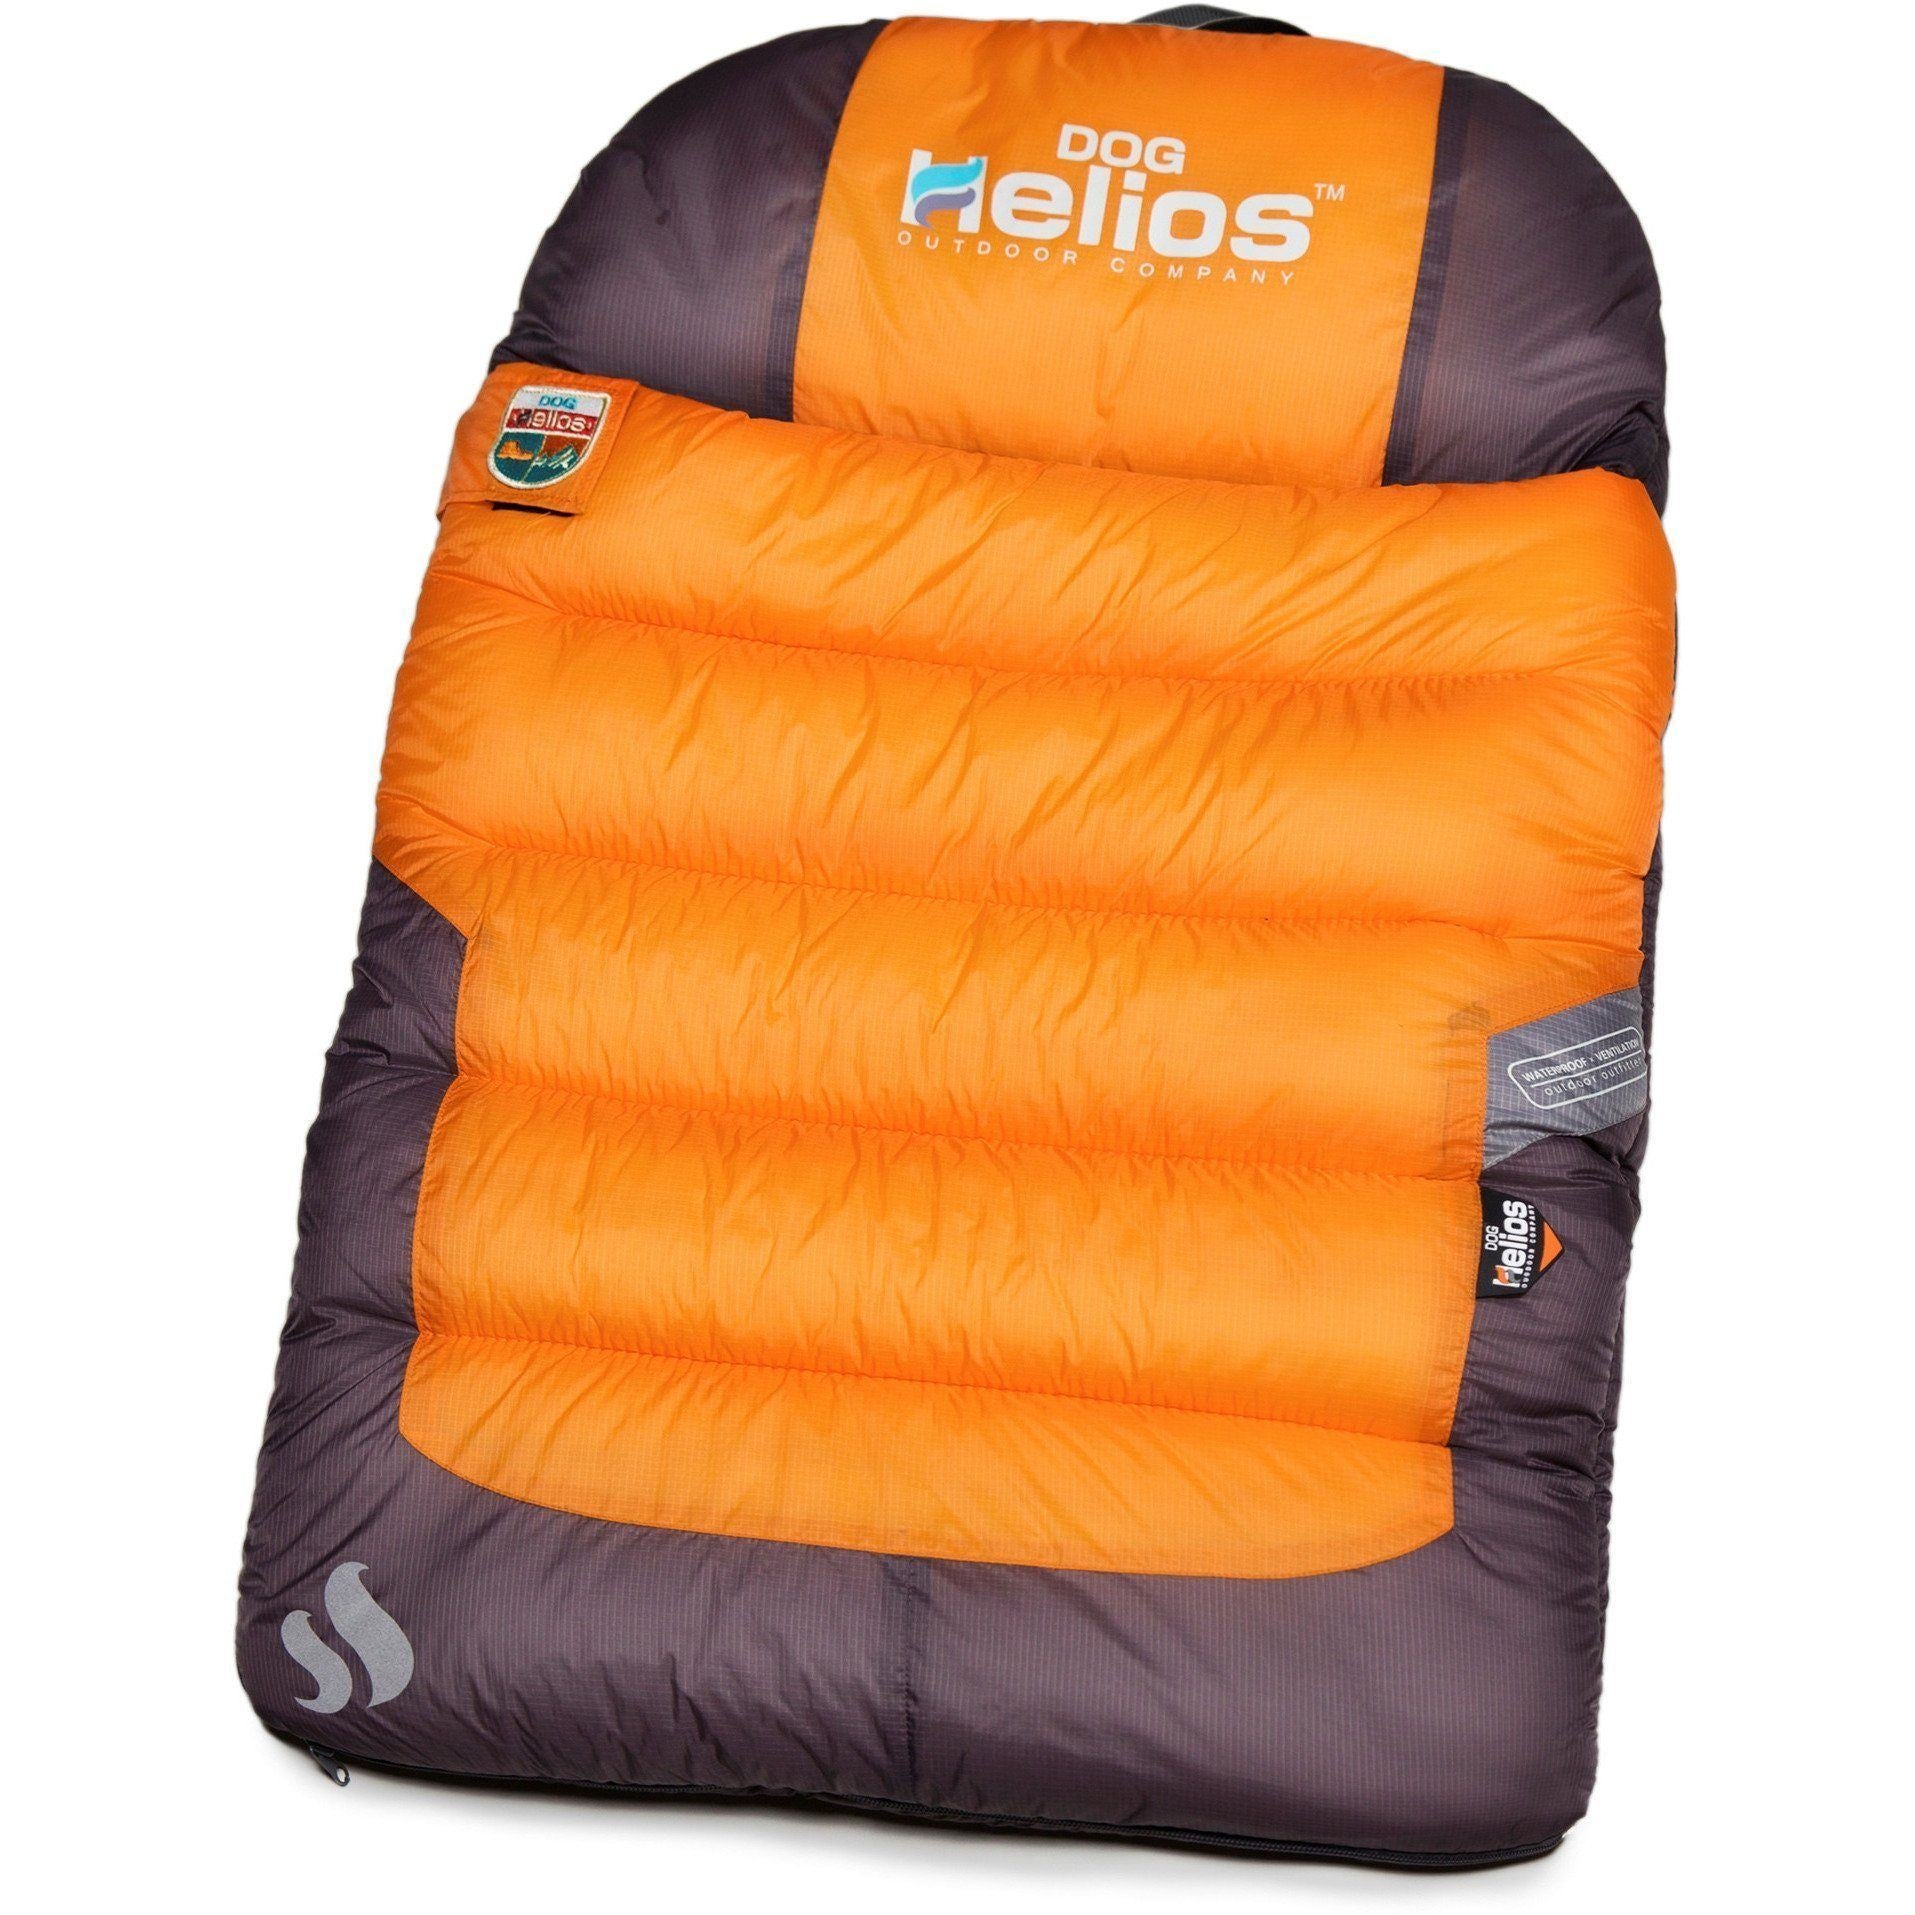 Dog Helios ® 'Trail-Barker' Multi-Surface Water-Resistant Travel Camping Dog Bed Sunkist Orange, Dark Grey 